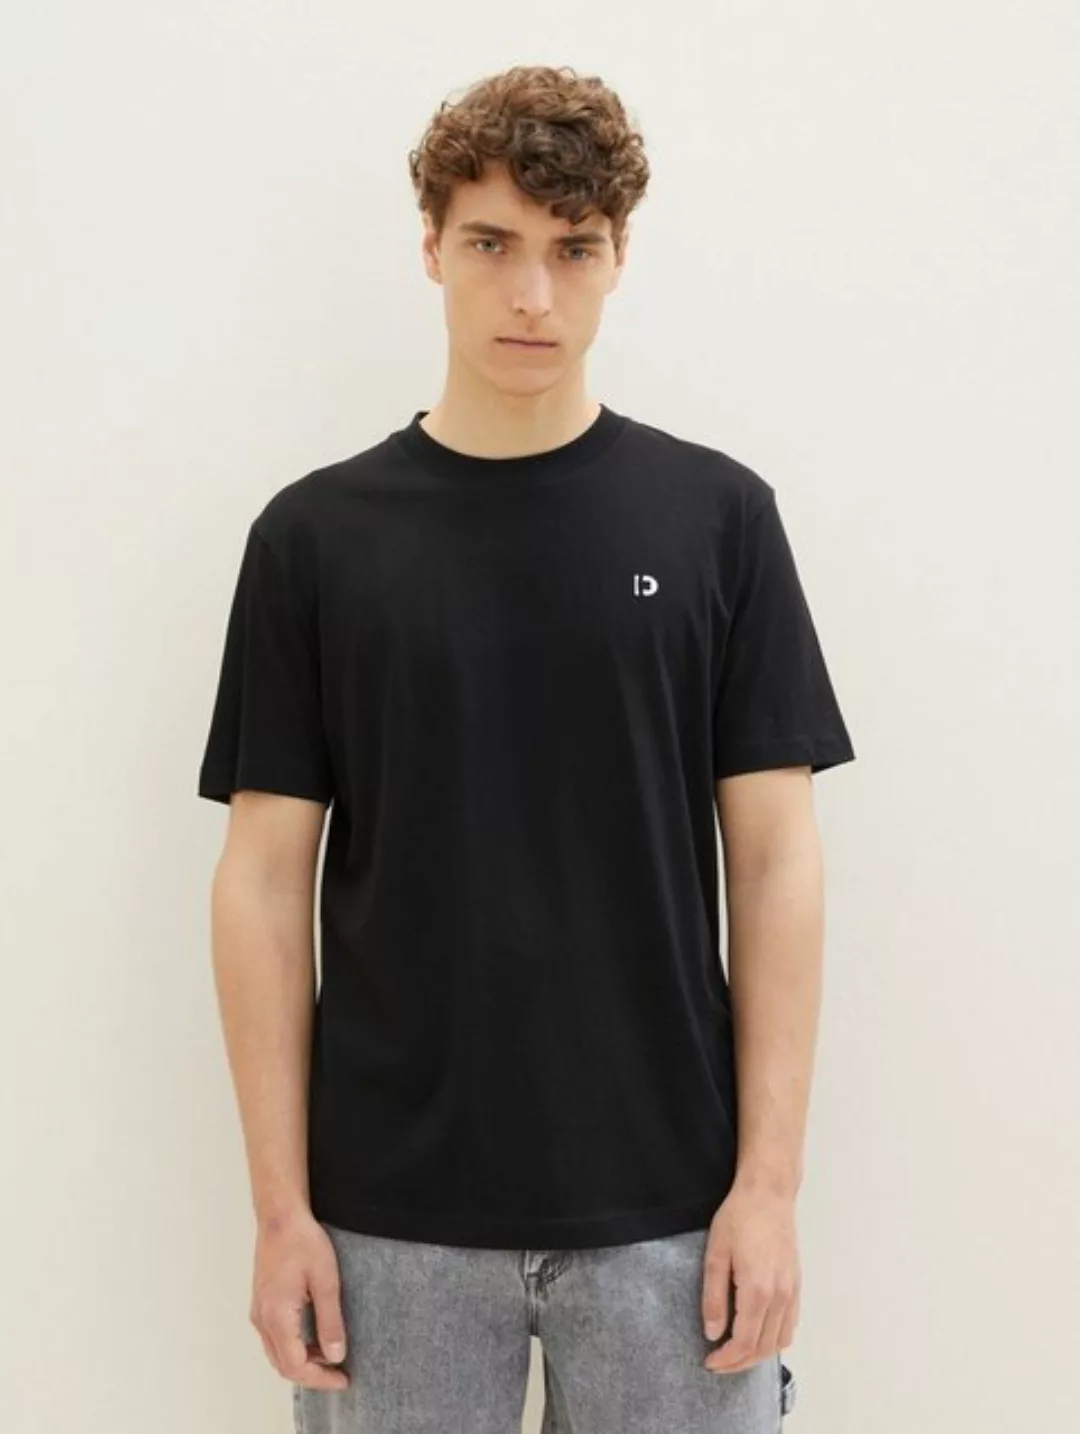 TOM TAILOR Denim T-Shirt Basic T-Shirt günstig online kaufen